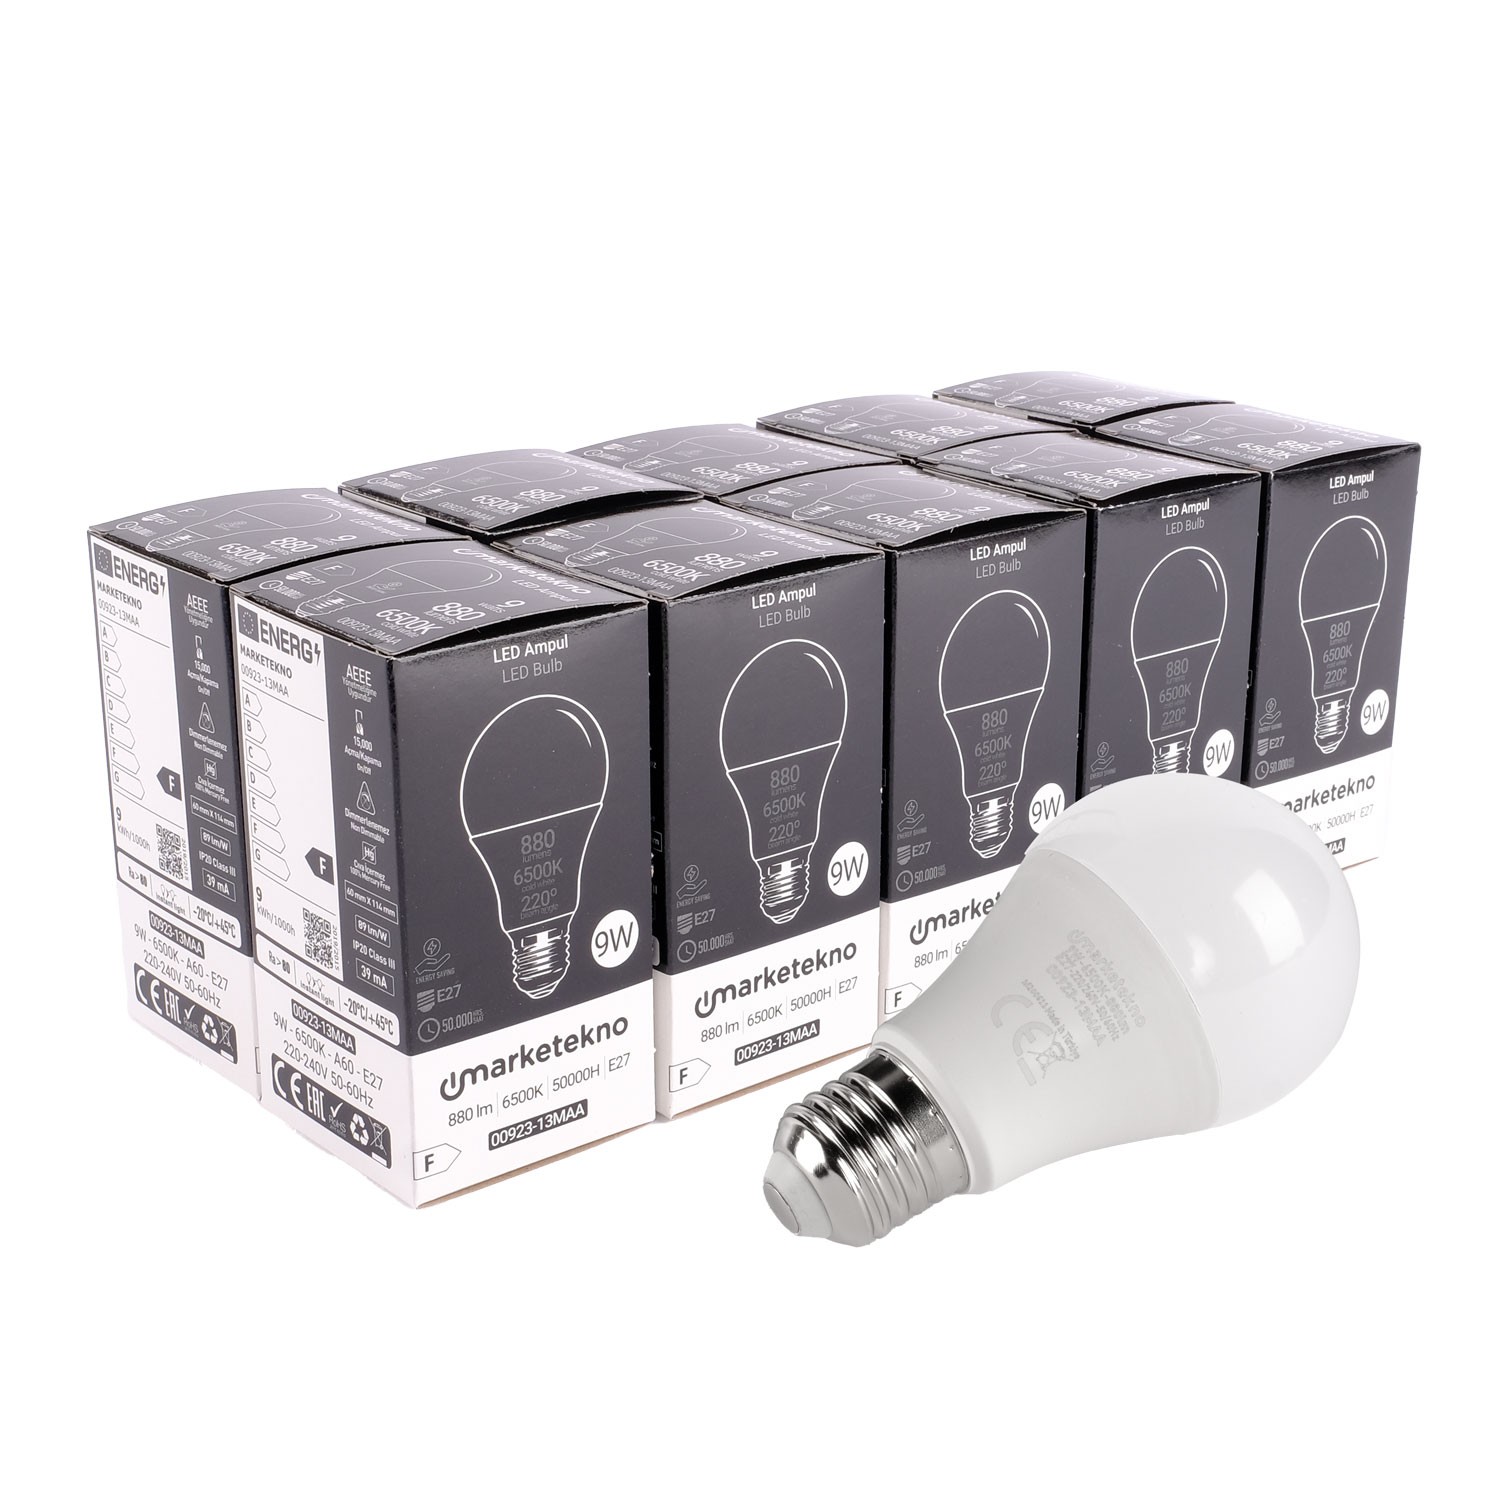 Marketekno 9W LED Ampul 6500K Beyaz Işık A60 E27 10'lu Paket Ampul